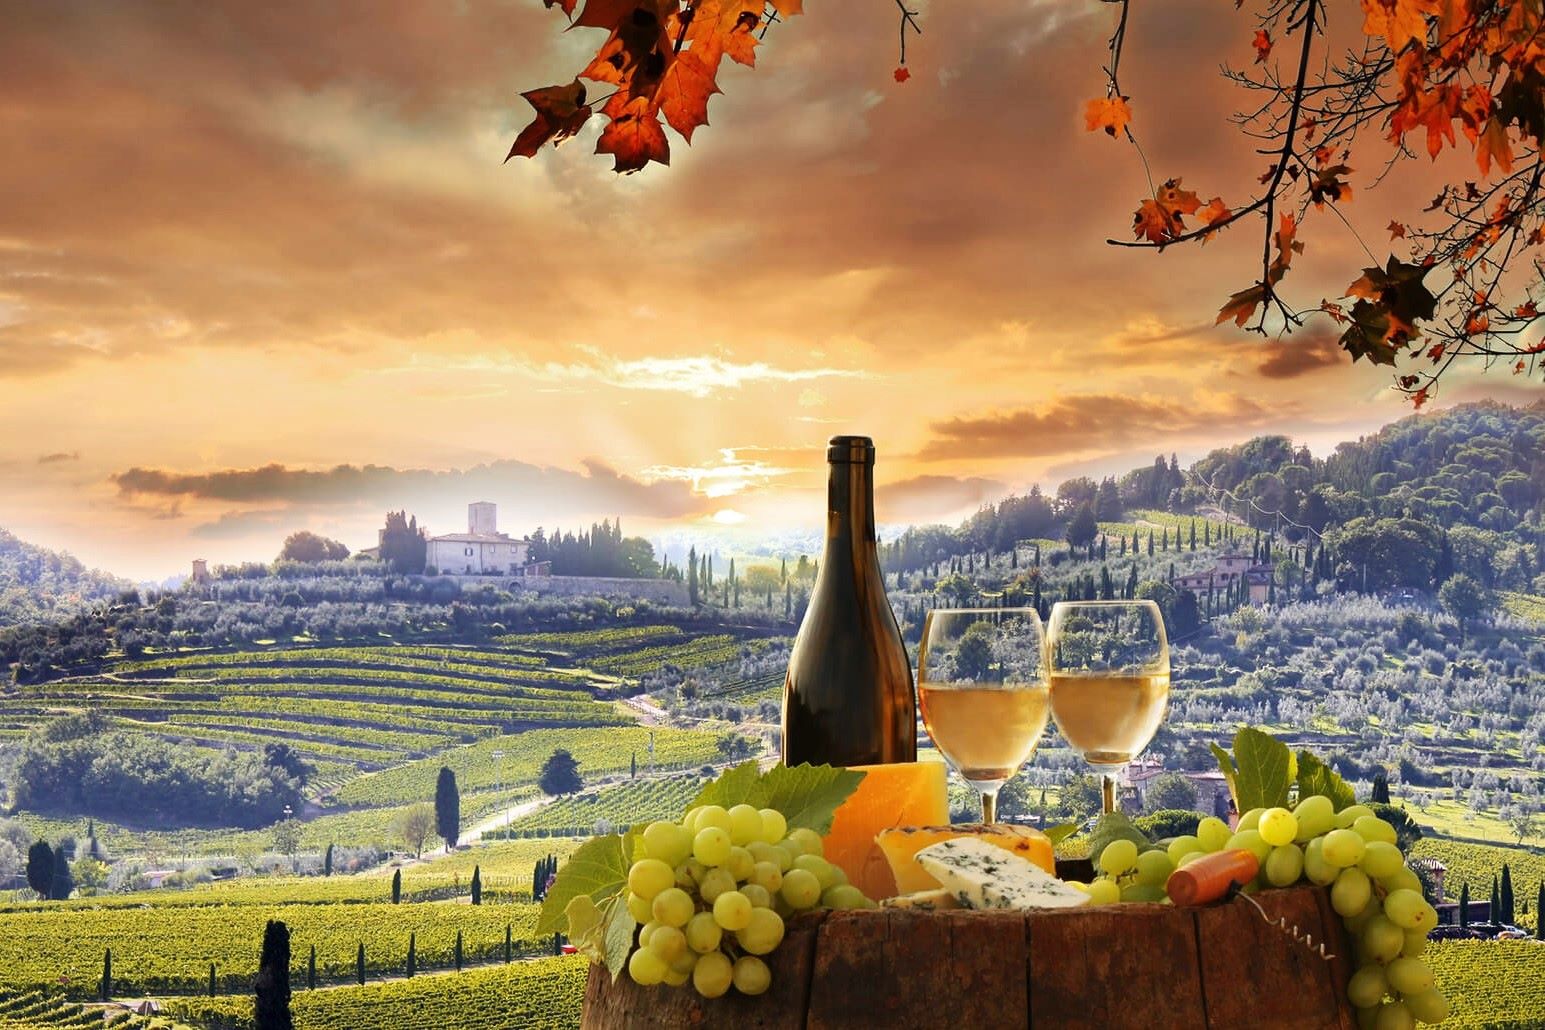 20 Italian Wine Facts - Facts.net